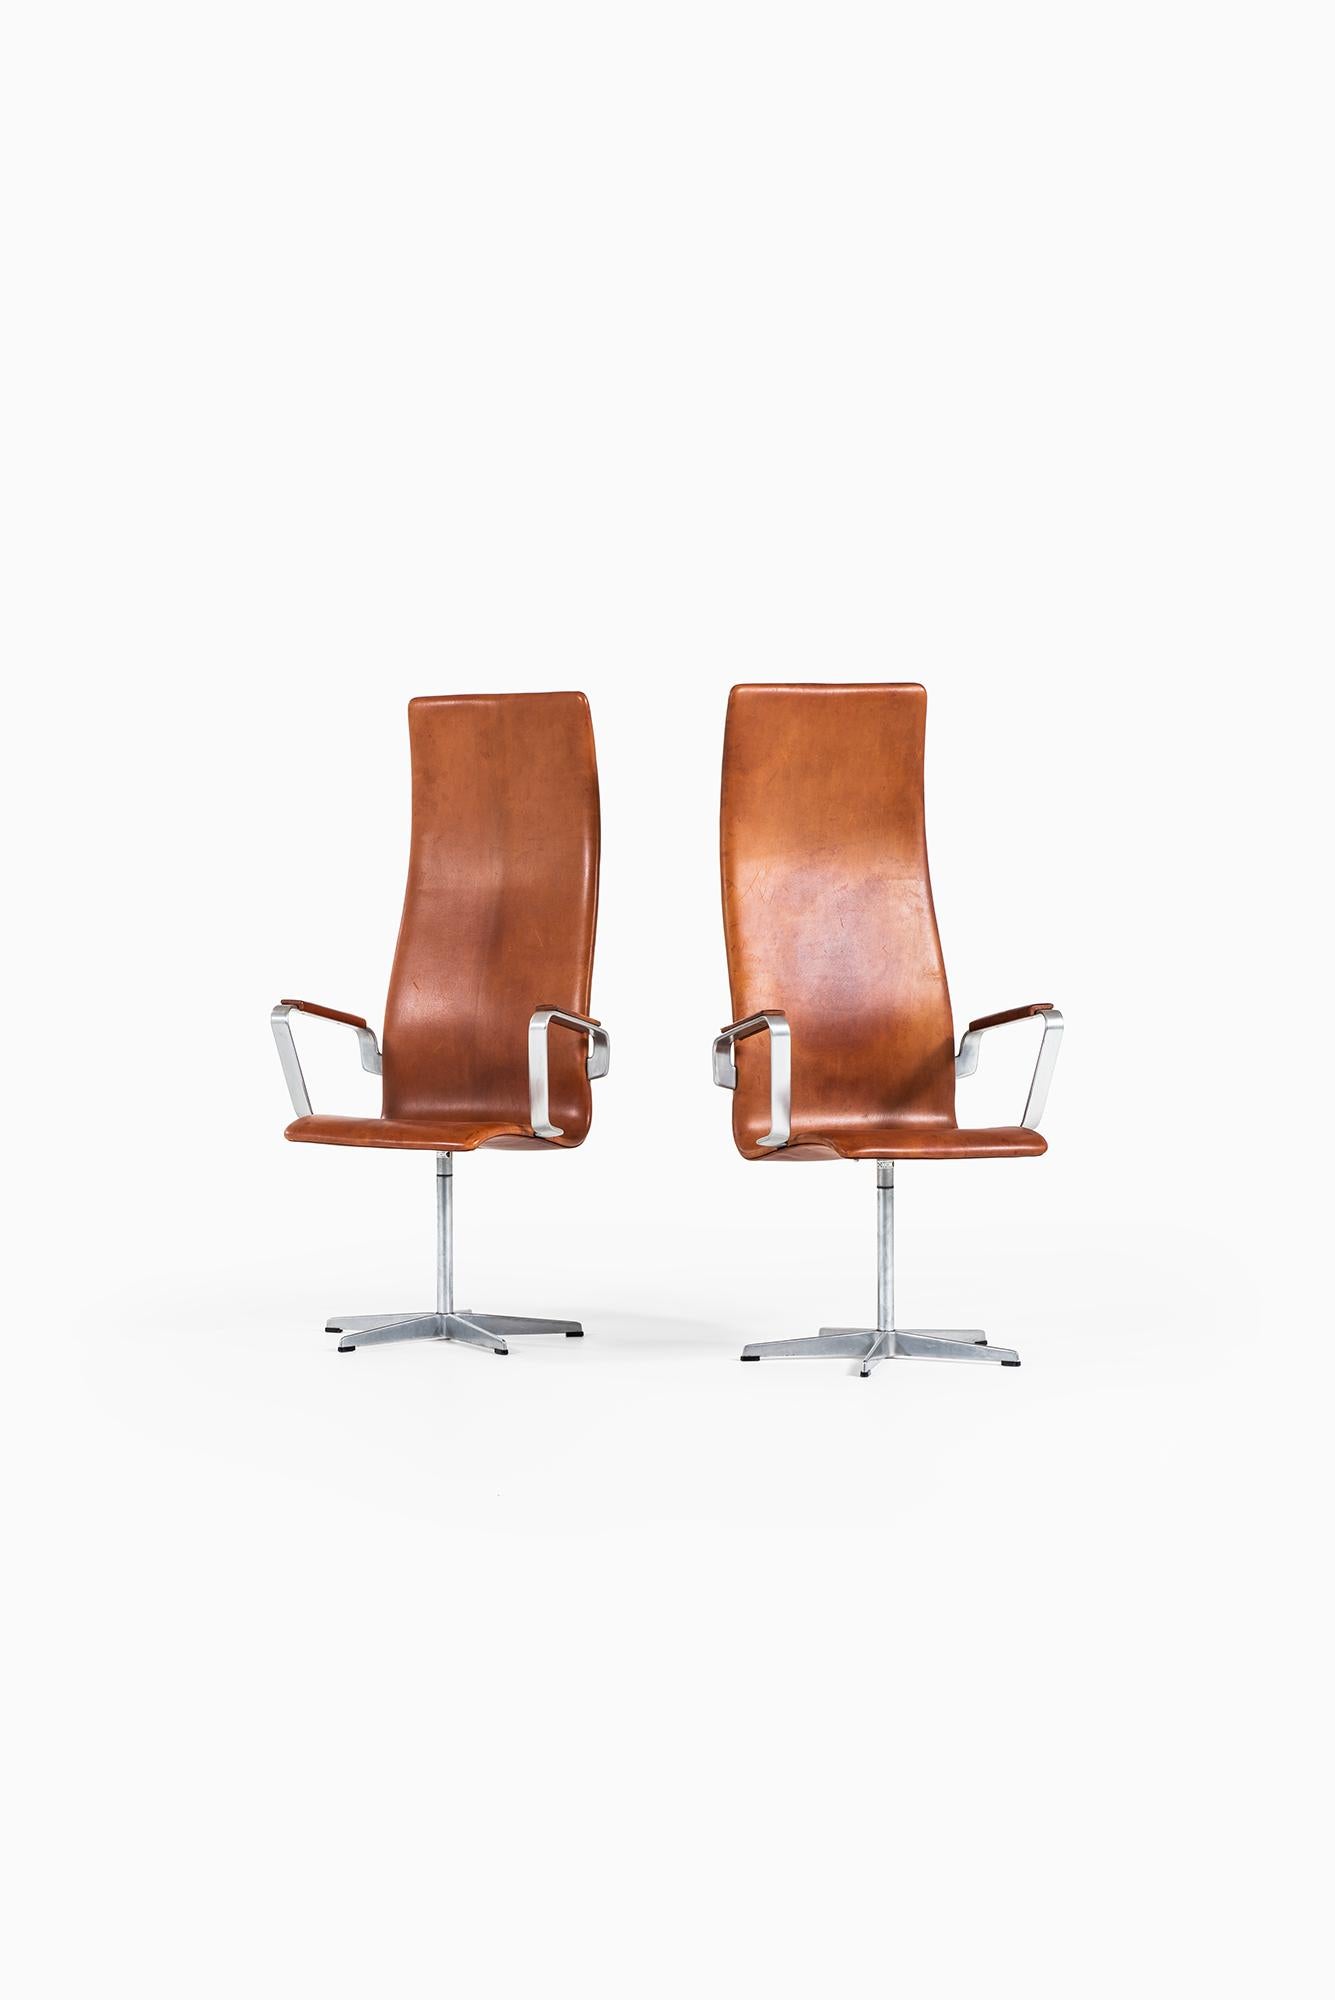 Scandinavian Modern Arne Jacobsen Oxford Chairs Model 3272 by Fritz Hansen in Denmark For Sale